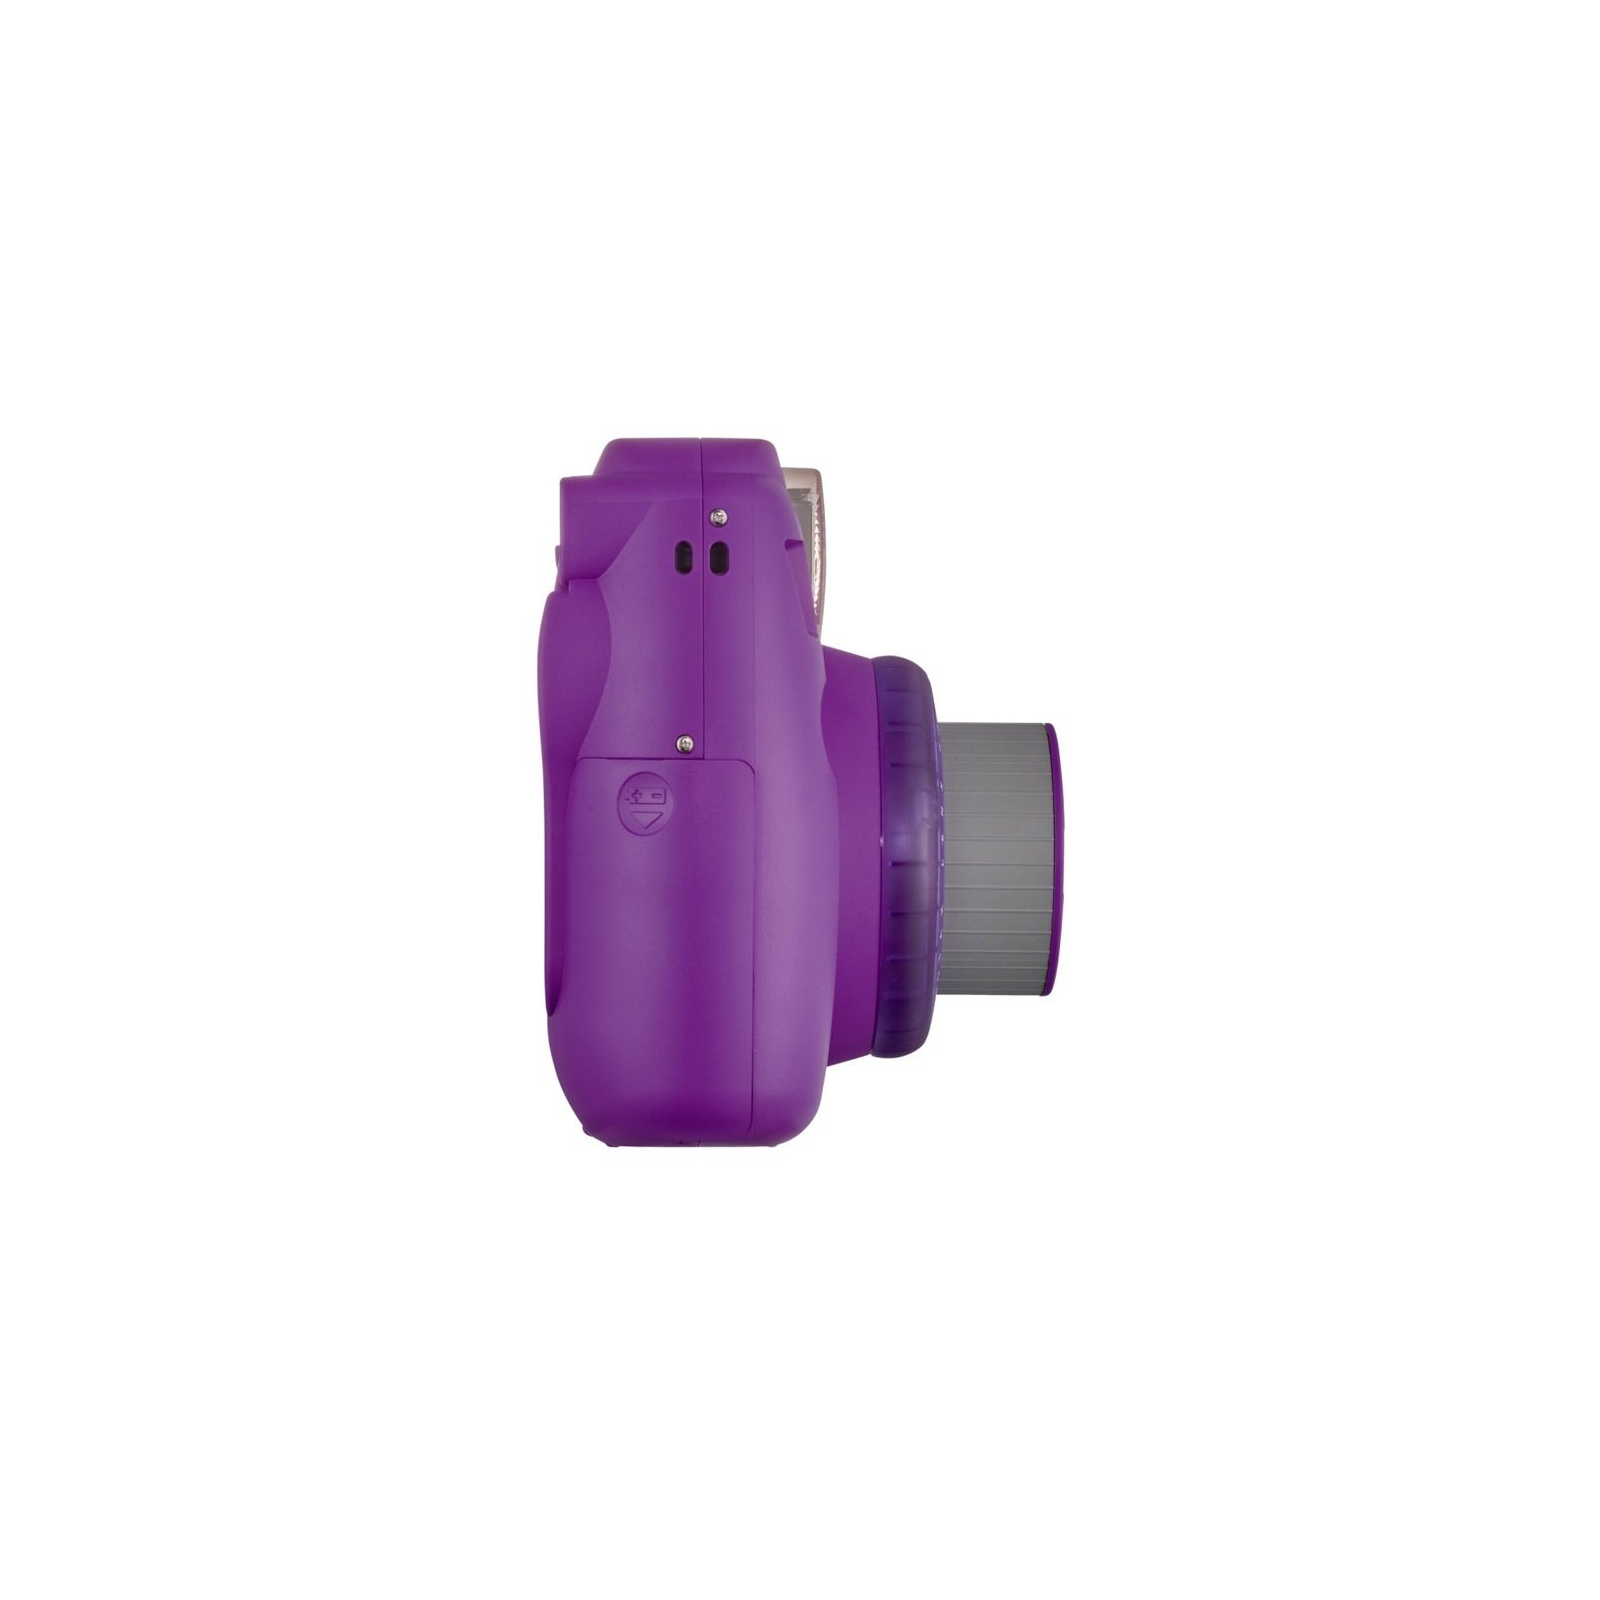 Камера моментальной печати Fujifilm INSTAX Mini 9 Purple (16632922) изображение 2